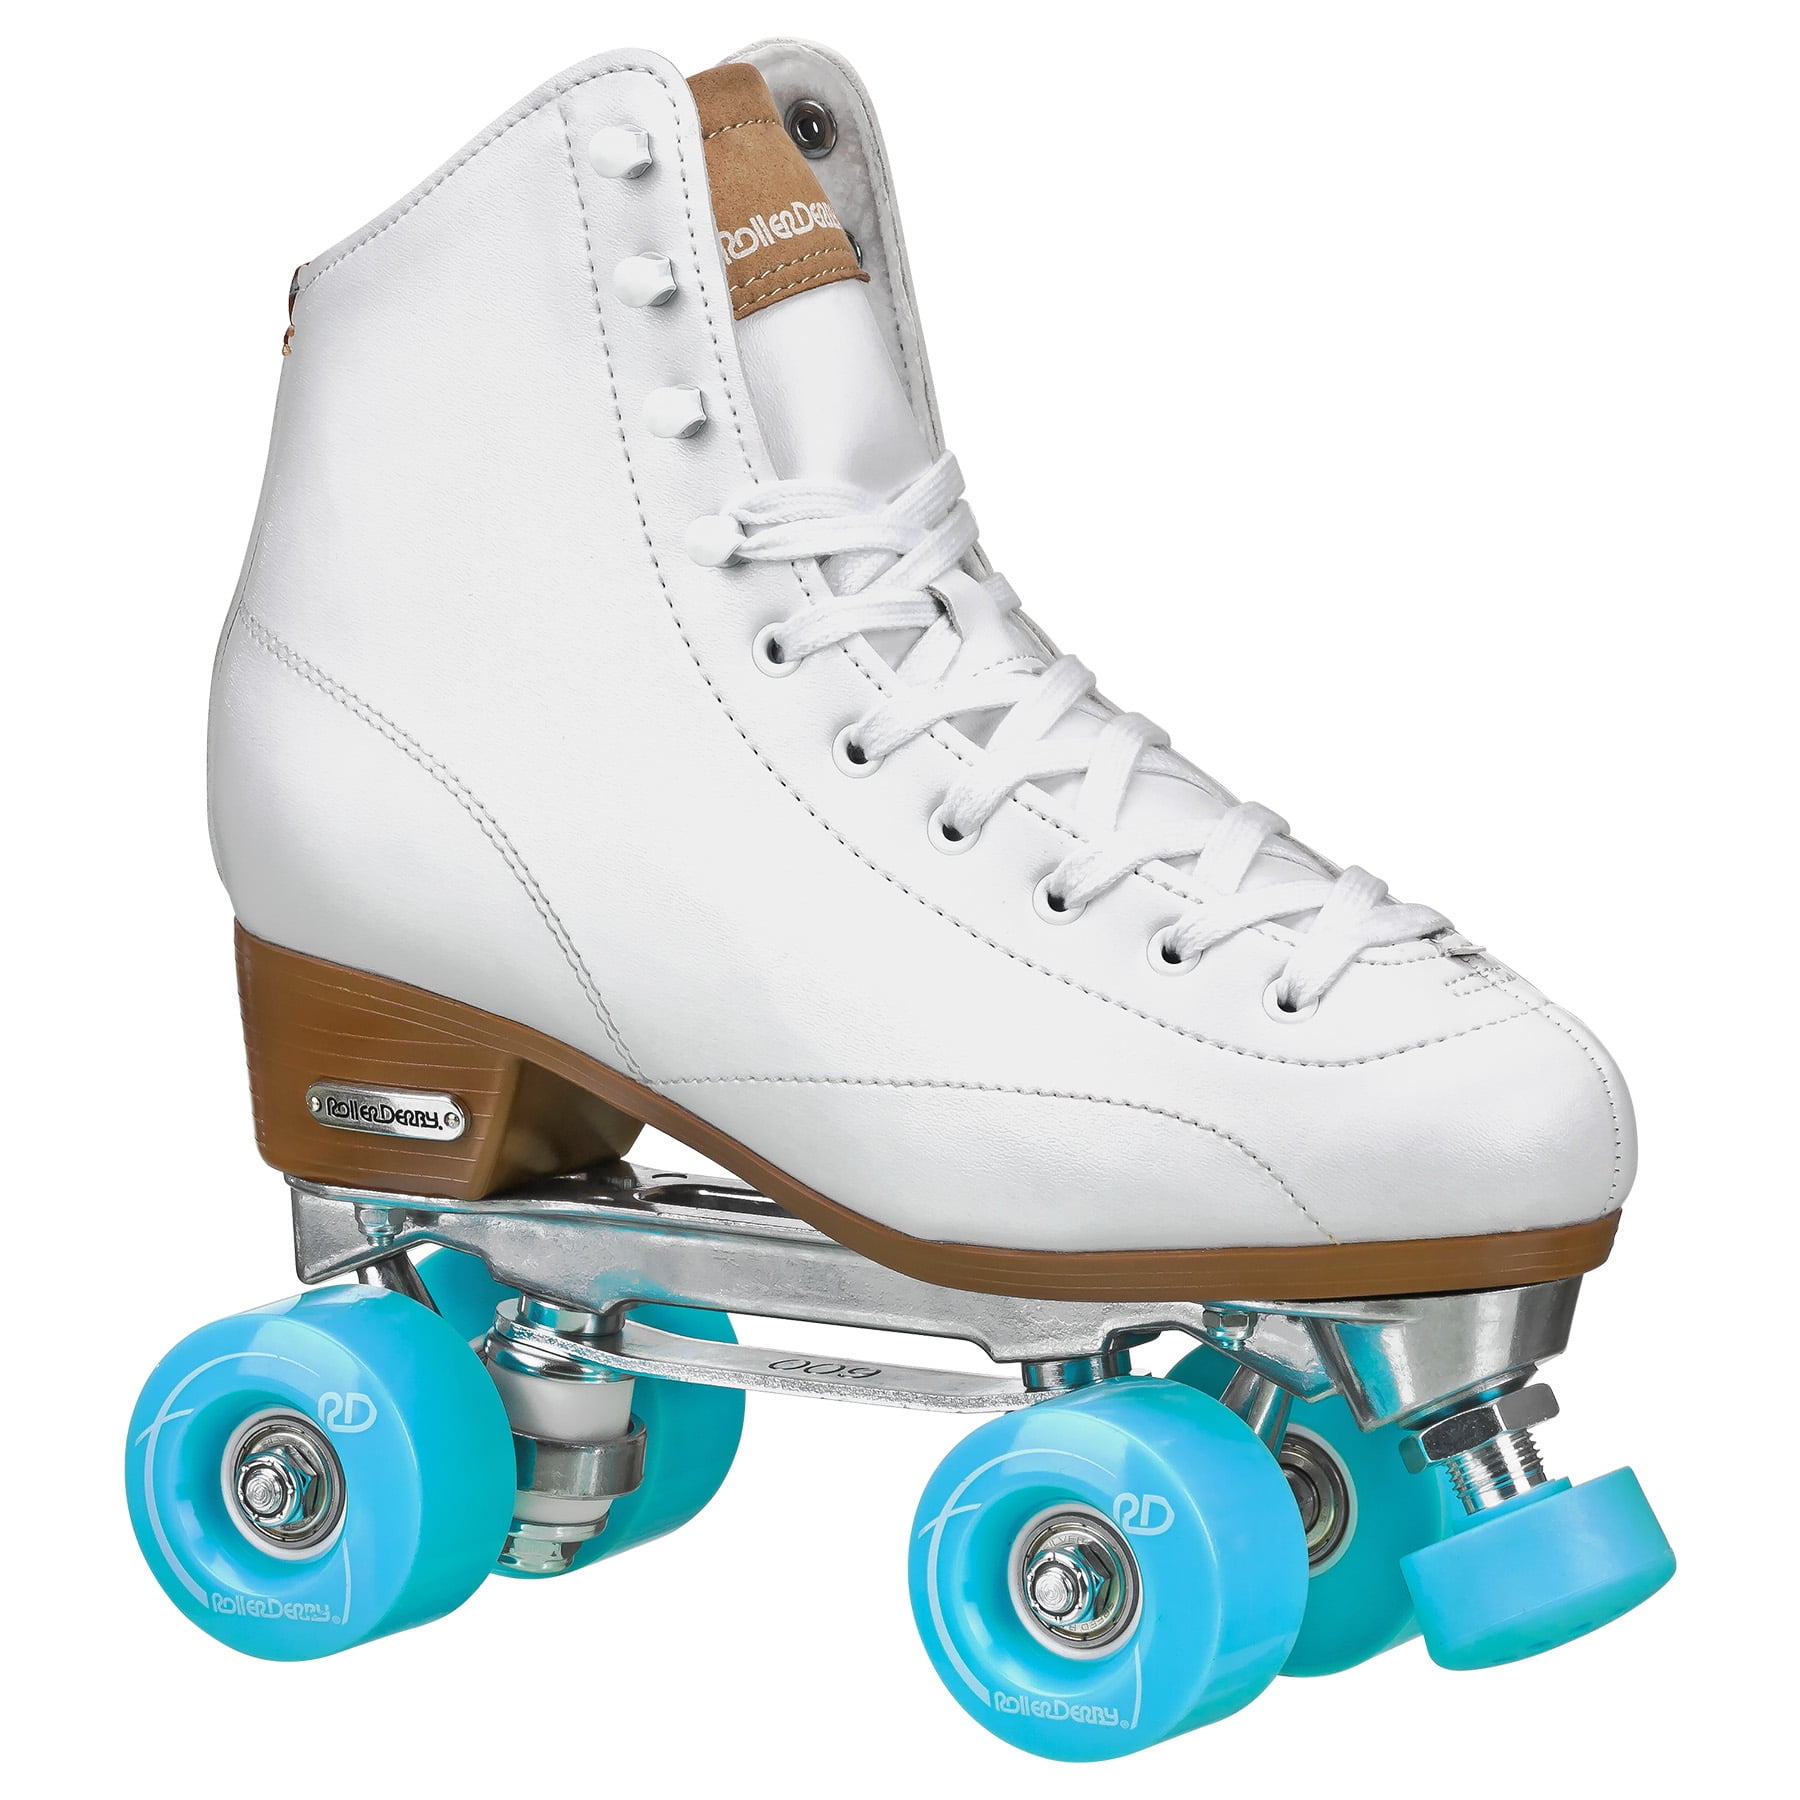 Razor Jetts Heel Wheels Adjustable Skates Plus 10 Replacement Cartridges for sale online 